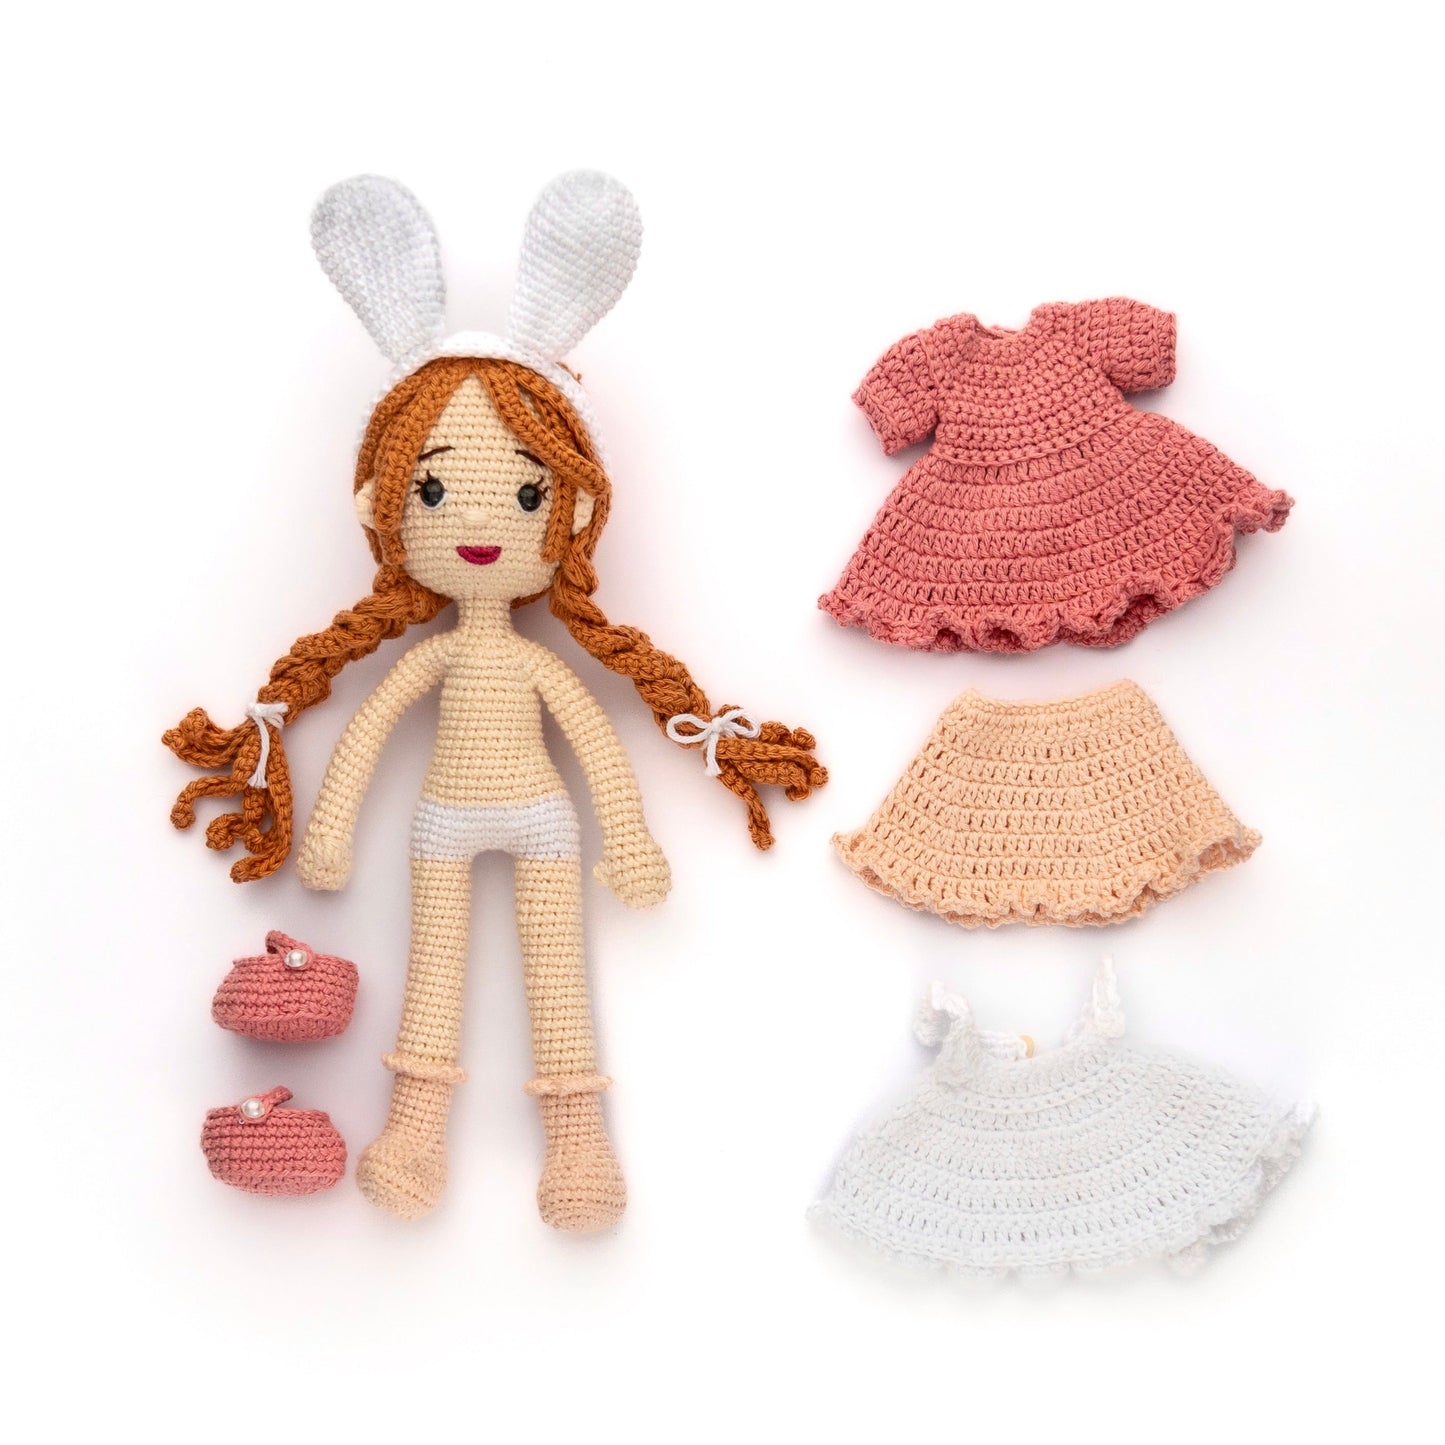 Crochet Doll "Anna"